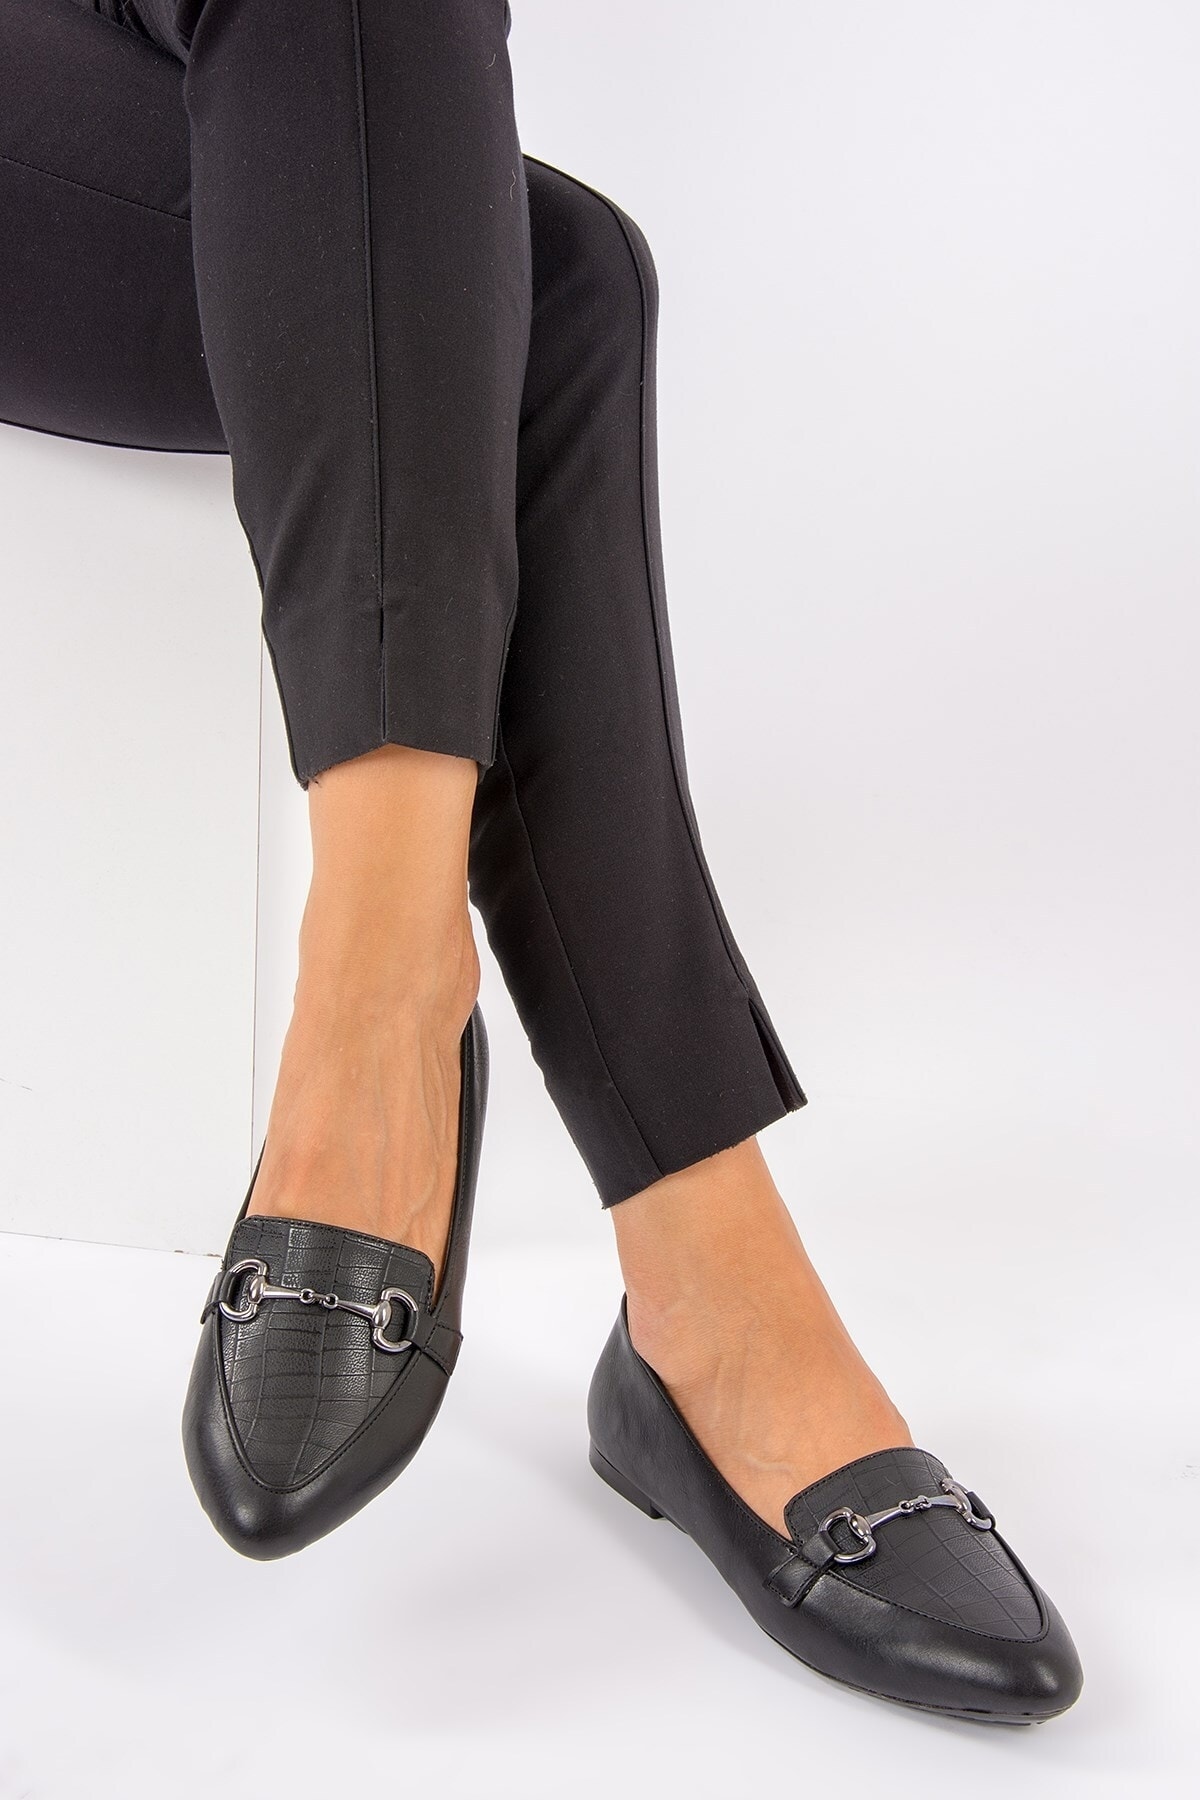 Fox Shoes Women's Black Flat Shoes